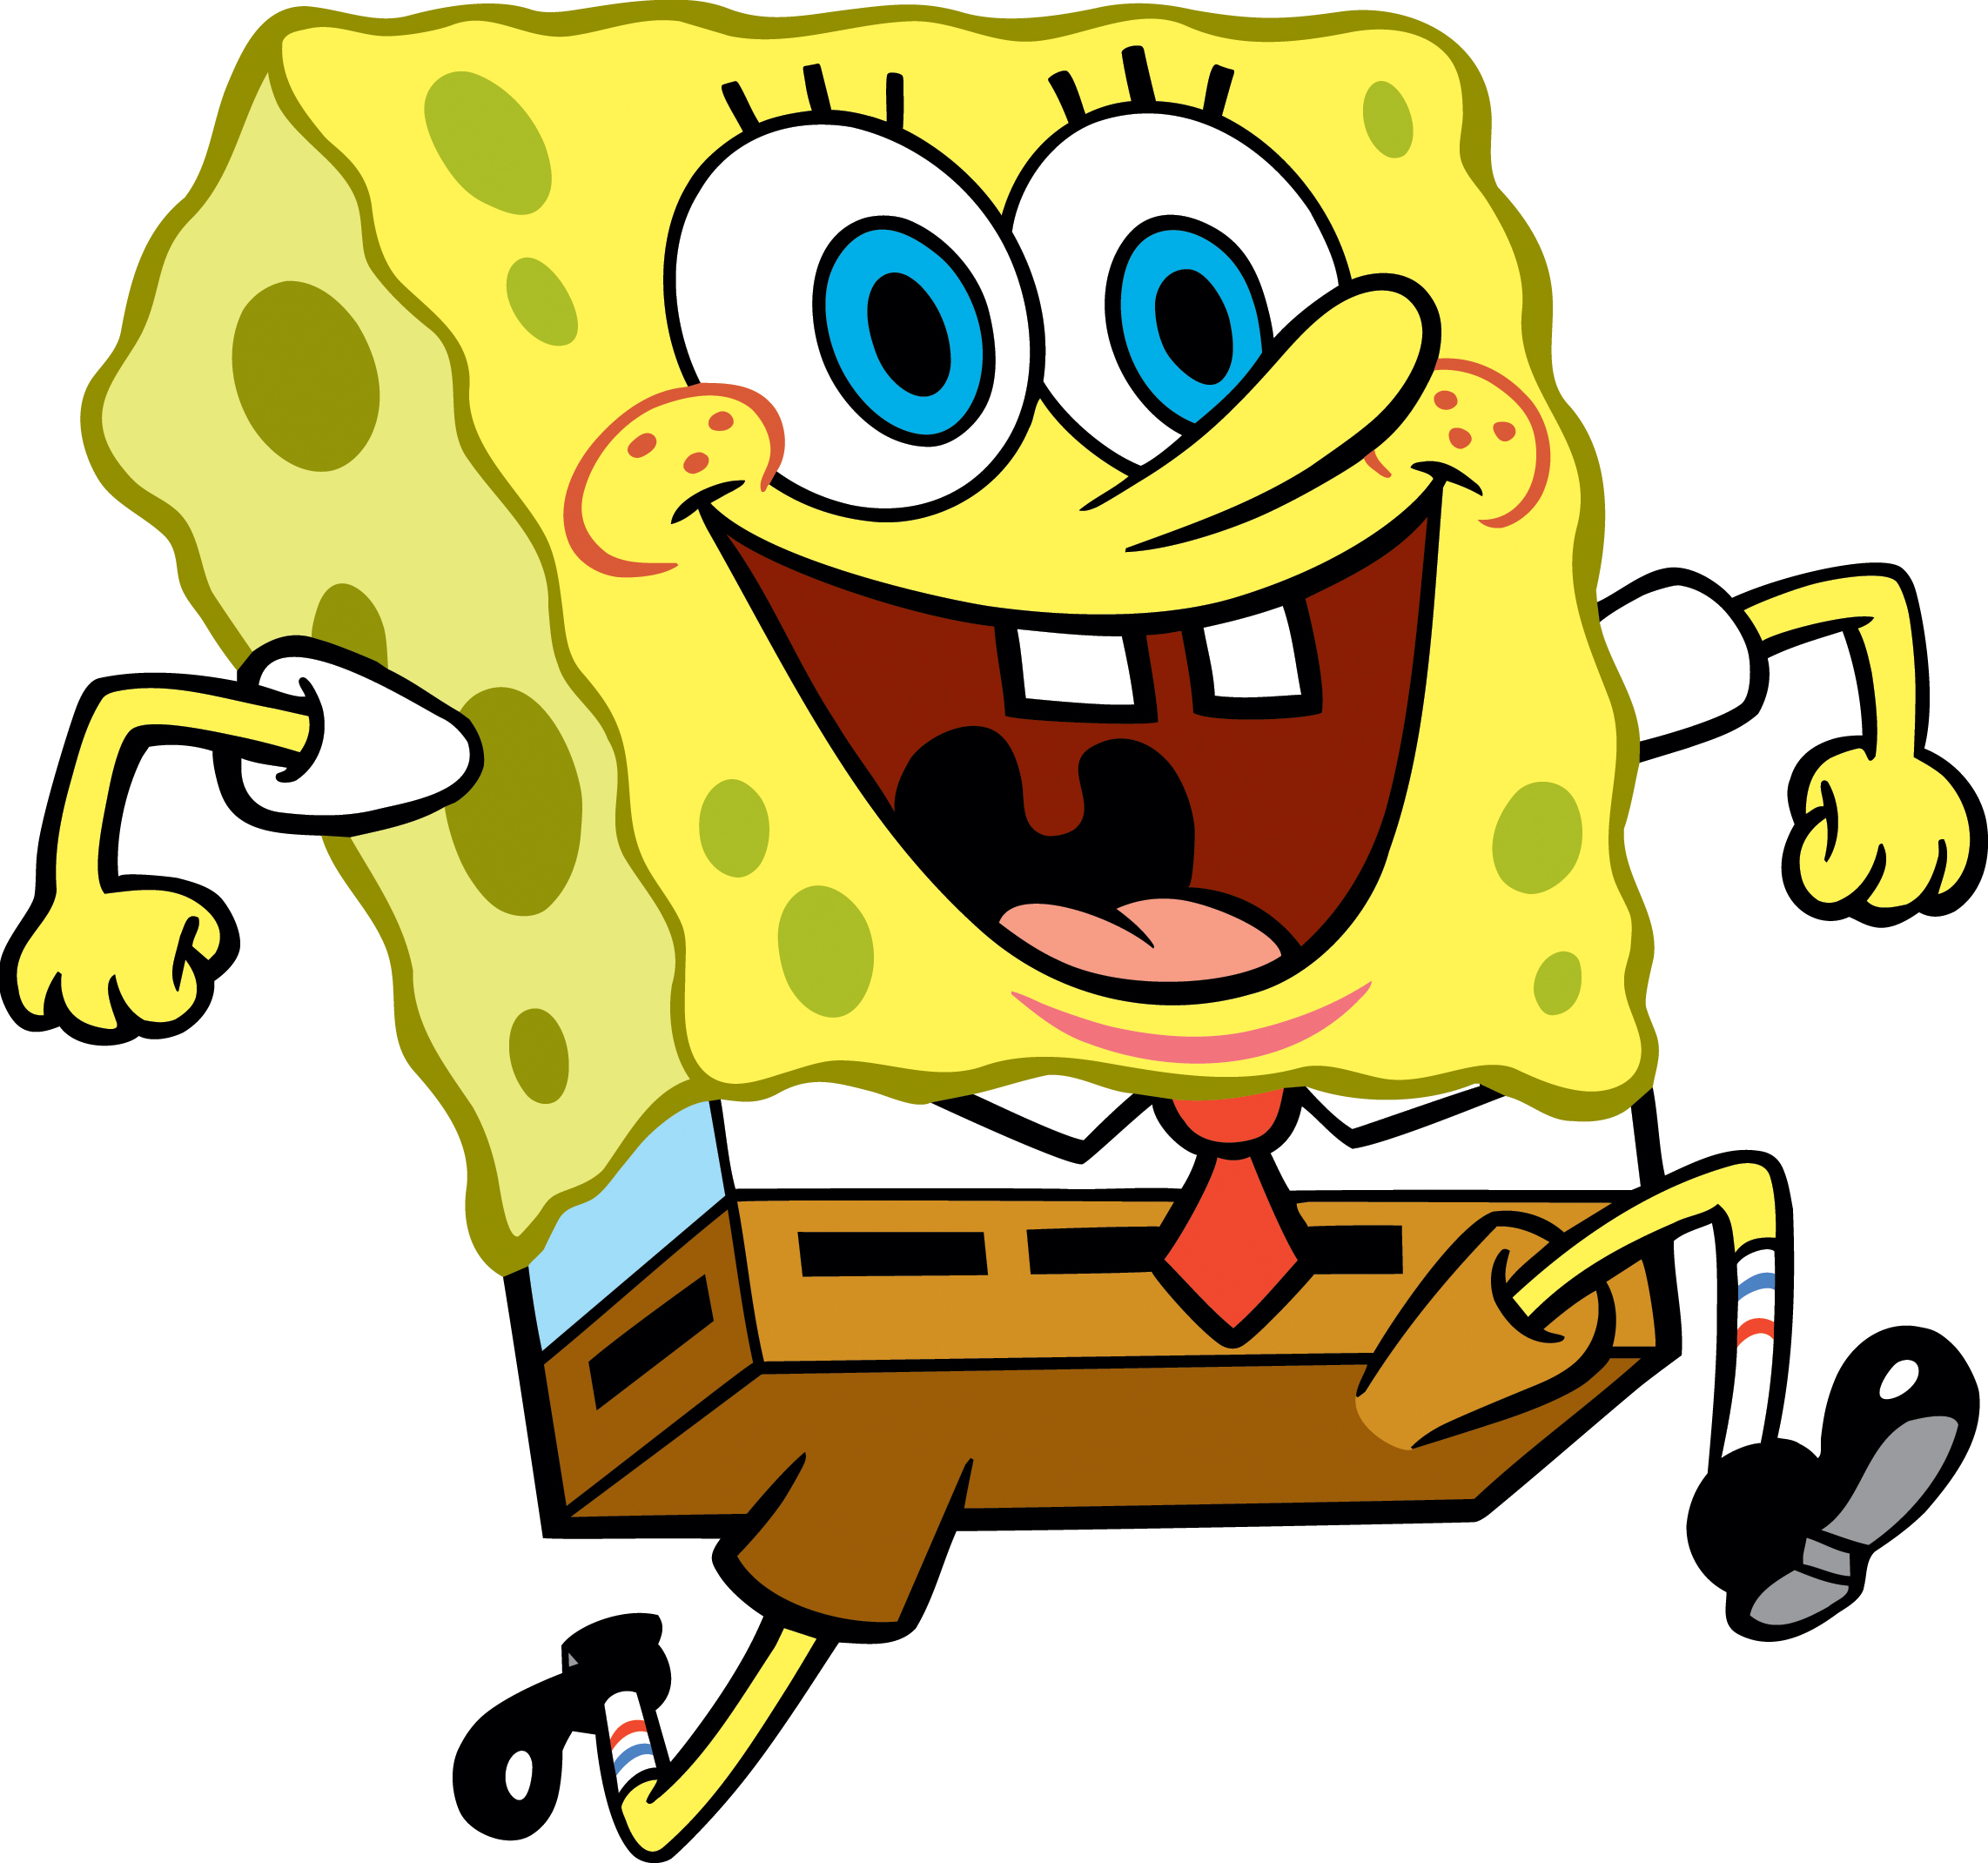 Spongebob-spongebob-squarepants-33210738-2284-2140